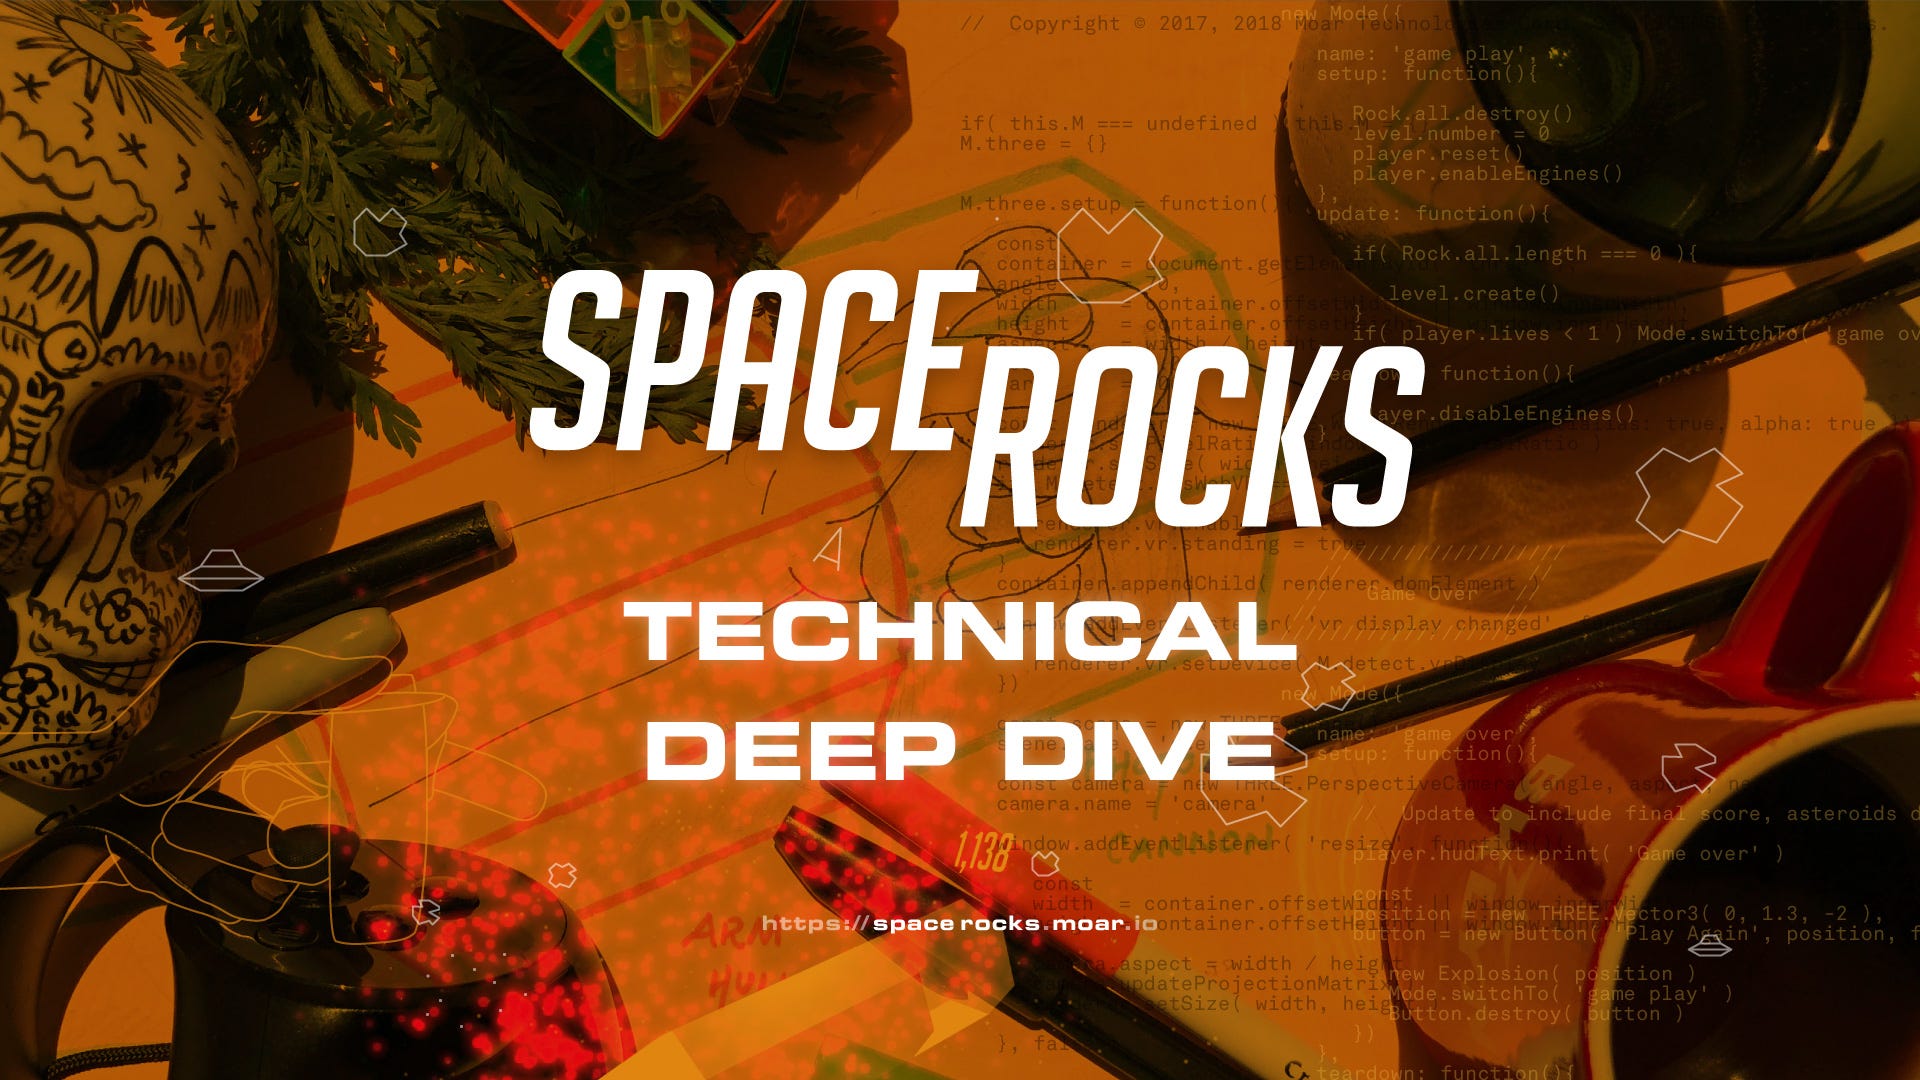 Space Rocks technical deep dive